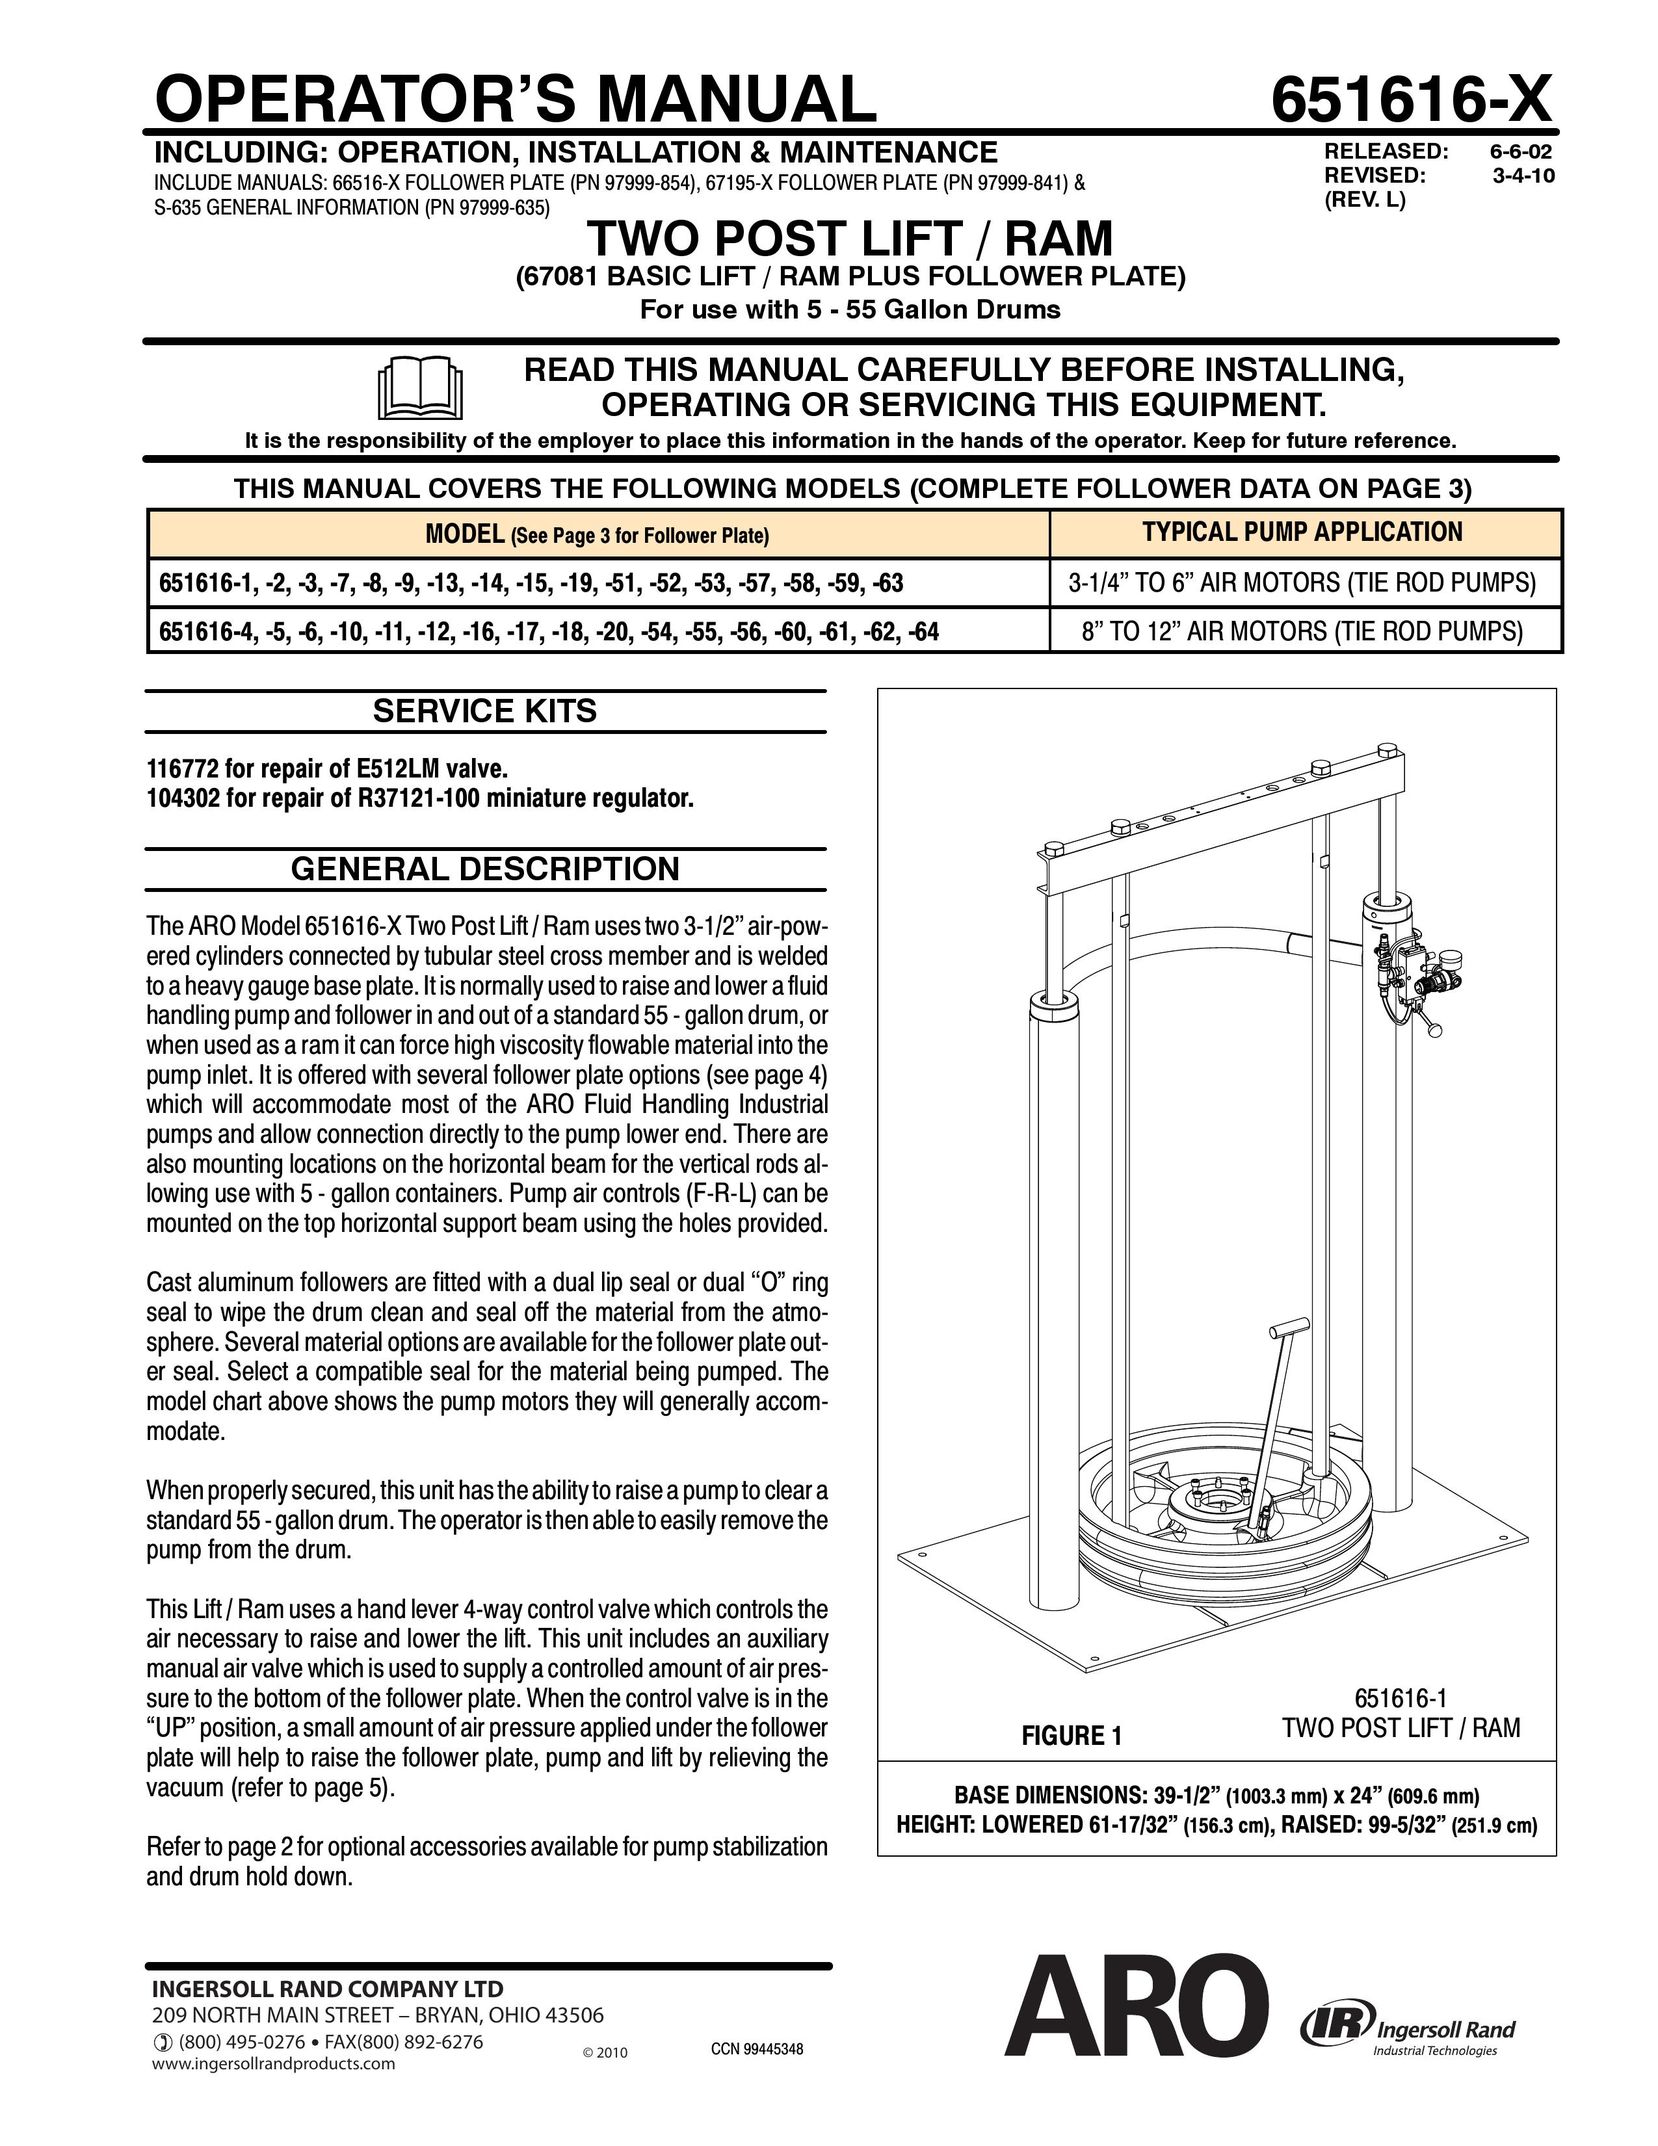 Ingersoll-Rand 651616-X Water Pump User Manual